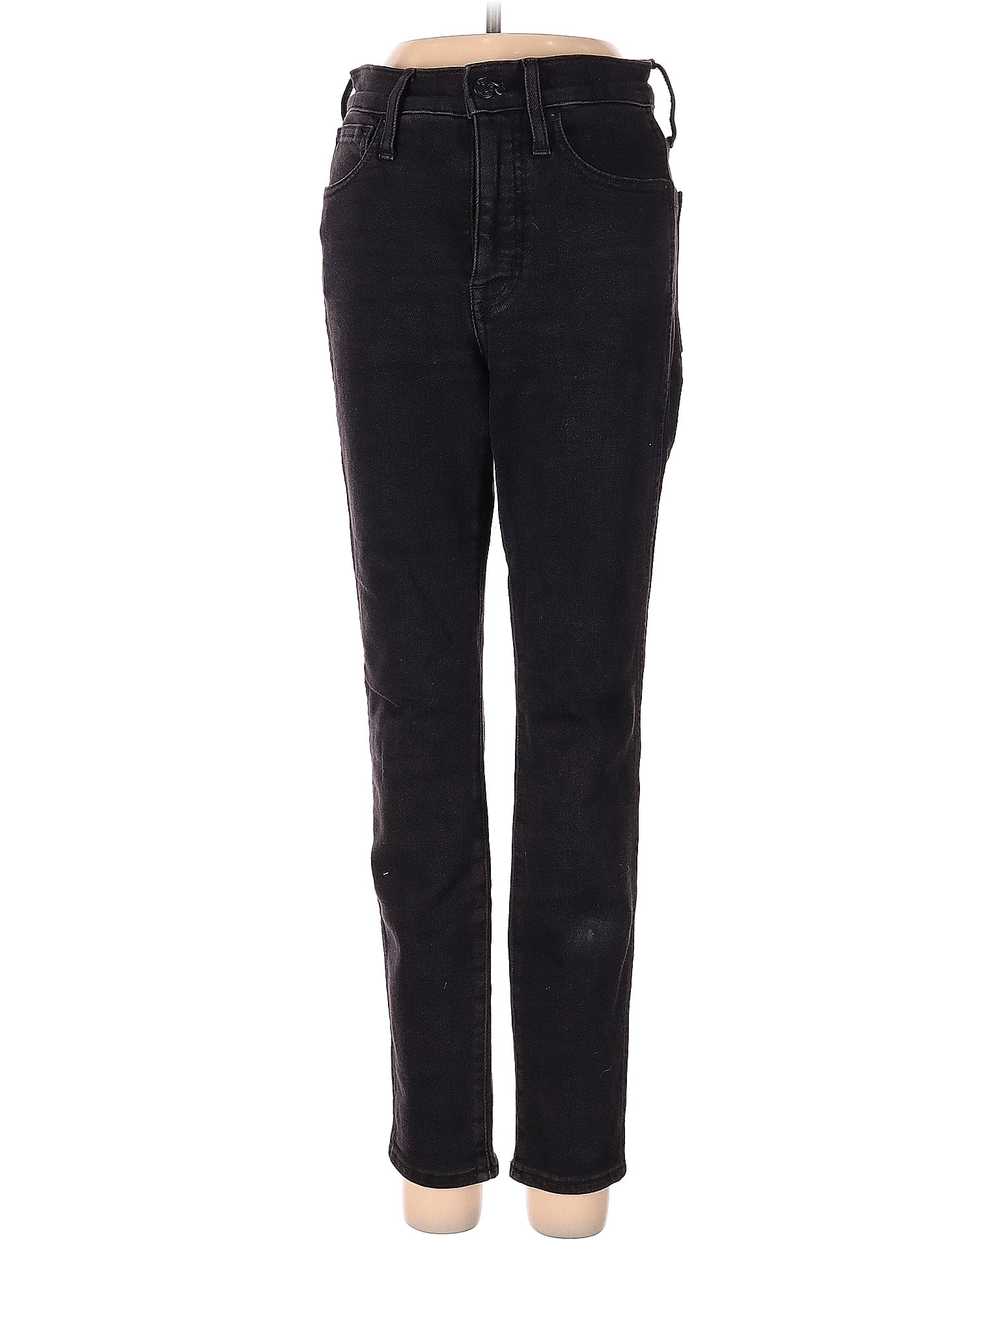 Madewell Women Black Jeans 25W - image 1